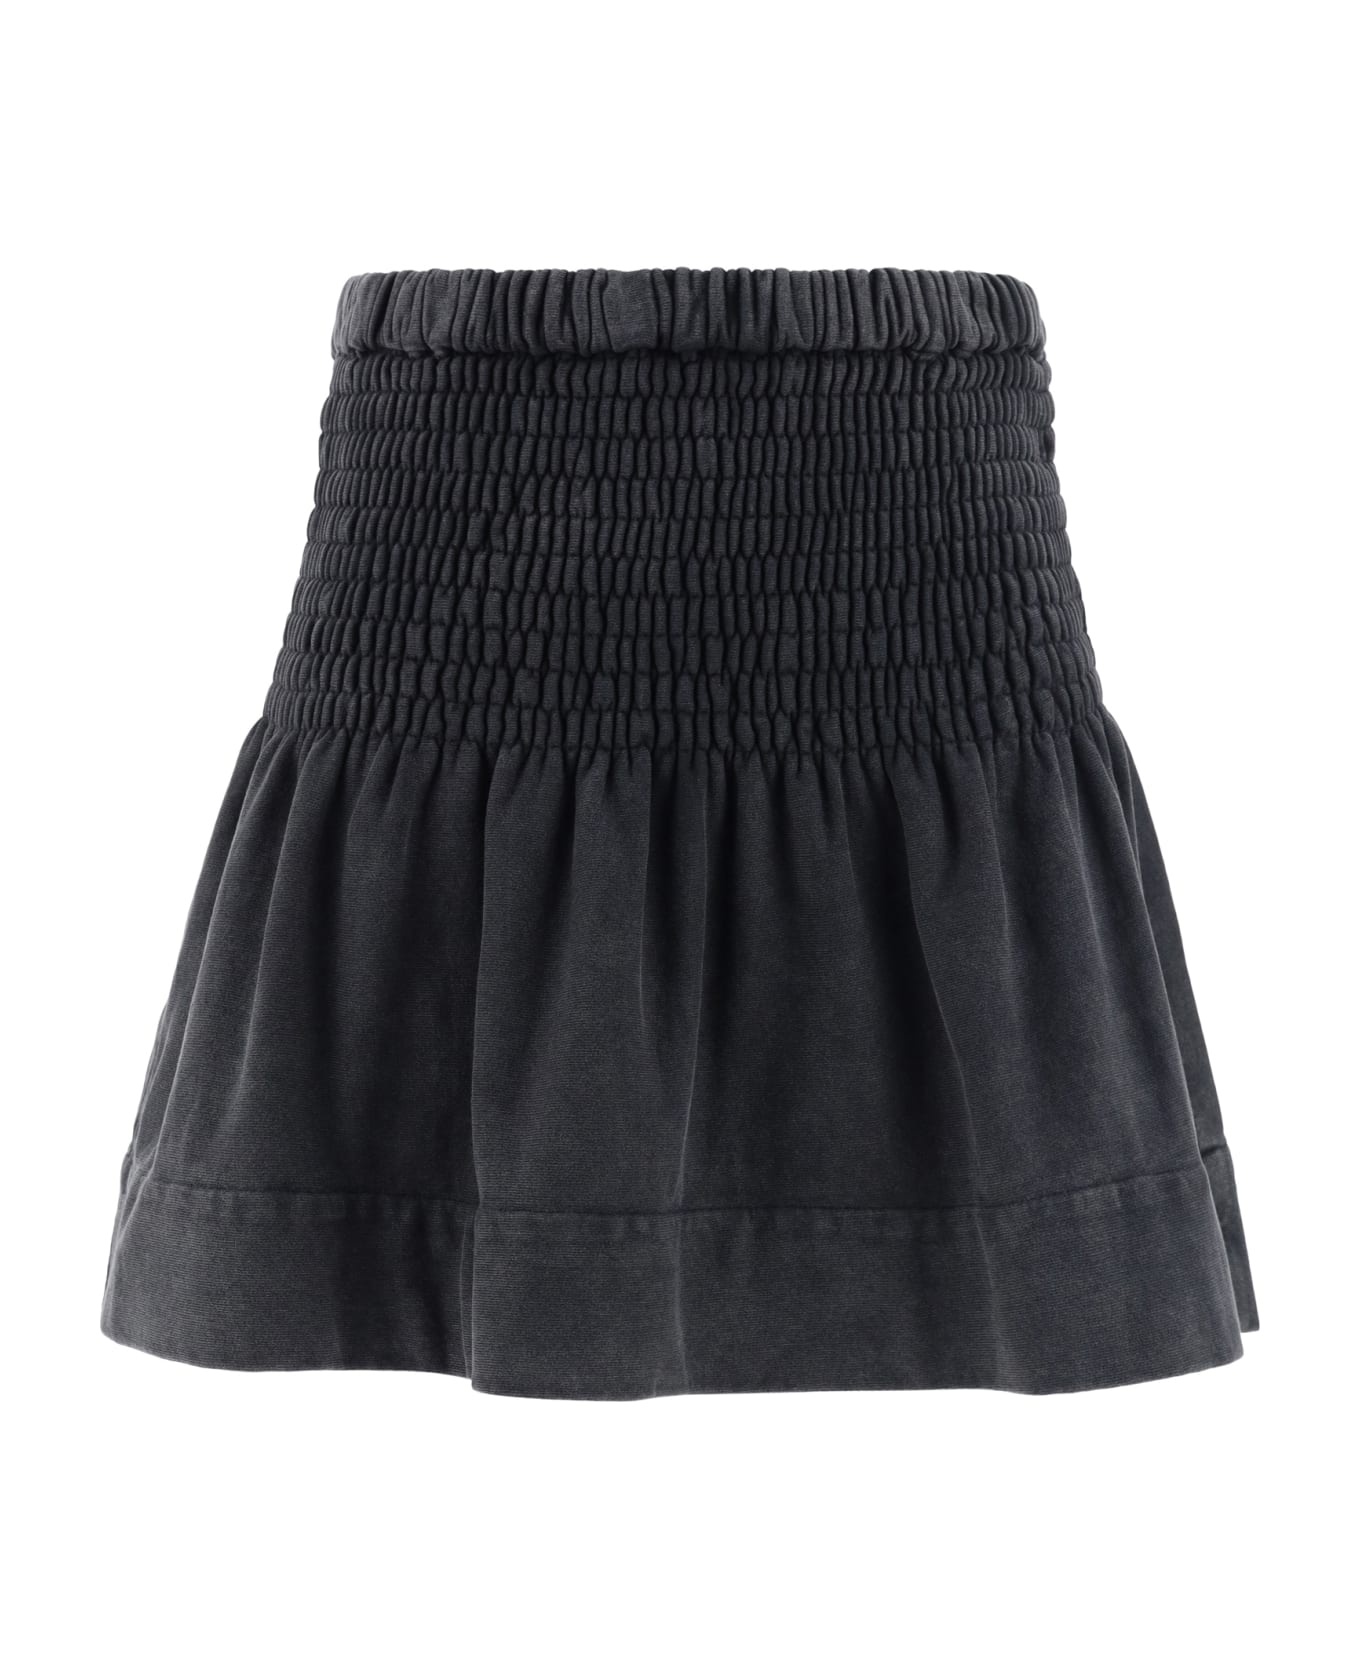 Marant Étoile Pacifica Mini Skirt - Faded Black スカート